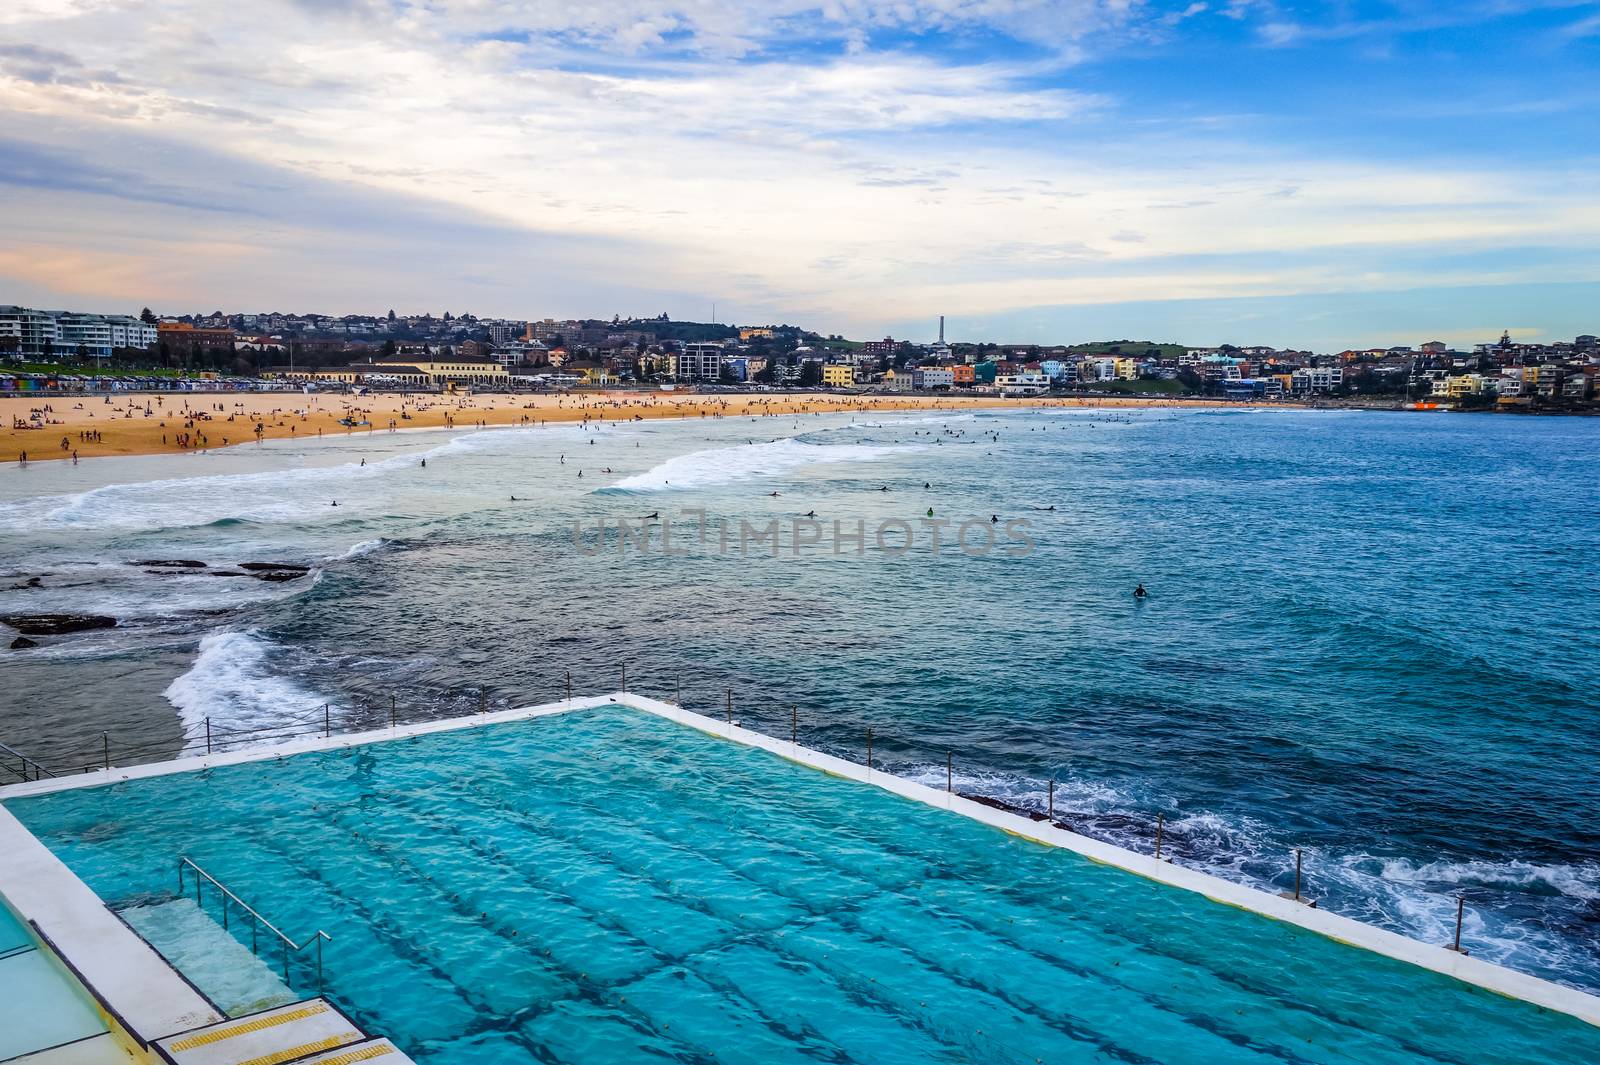 Bondi Beach and swimming pool, Sidney, Australia by daboost